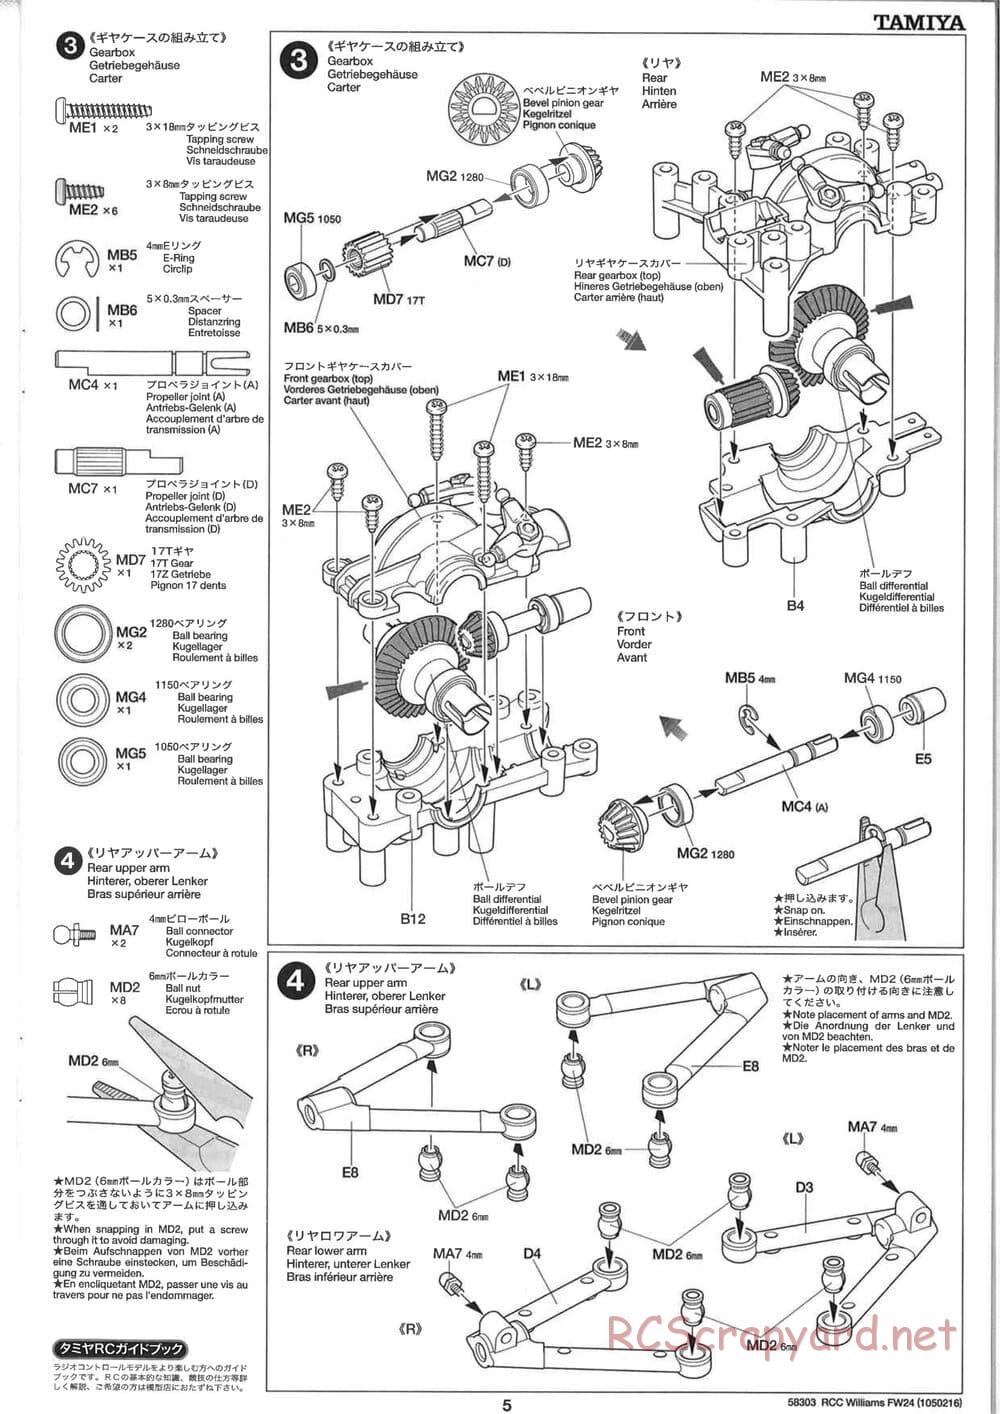 Tamiya - Williams F1 BMW FW24 - F201 Chassis - Manual - Page 5